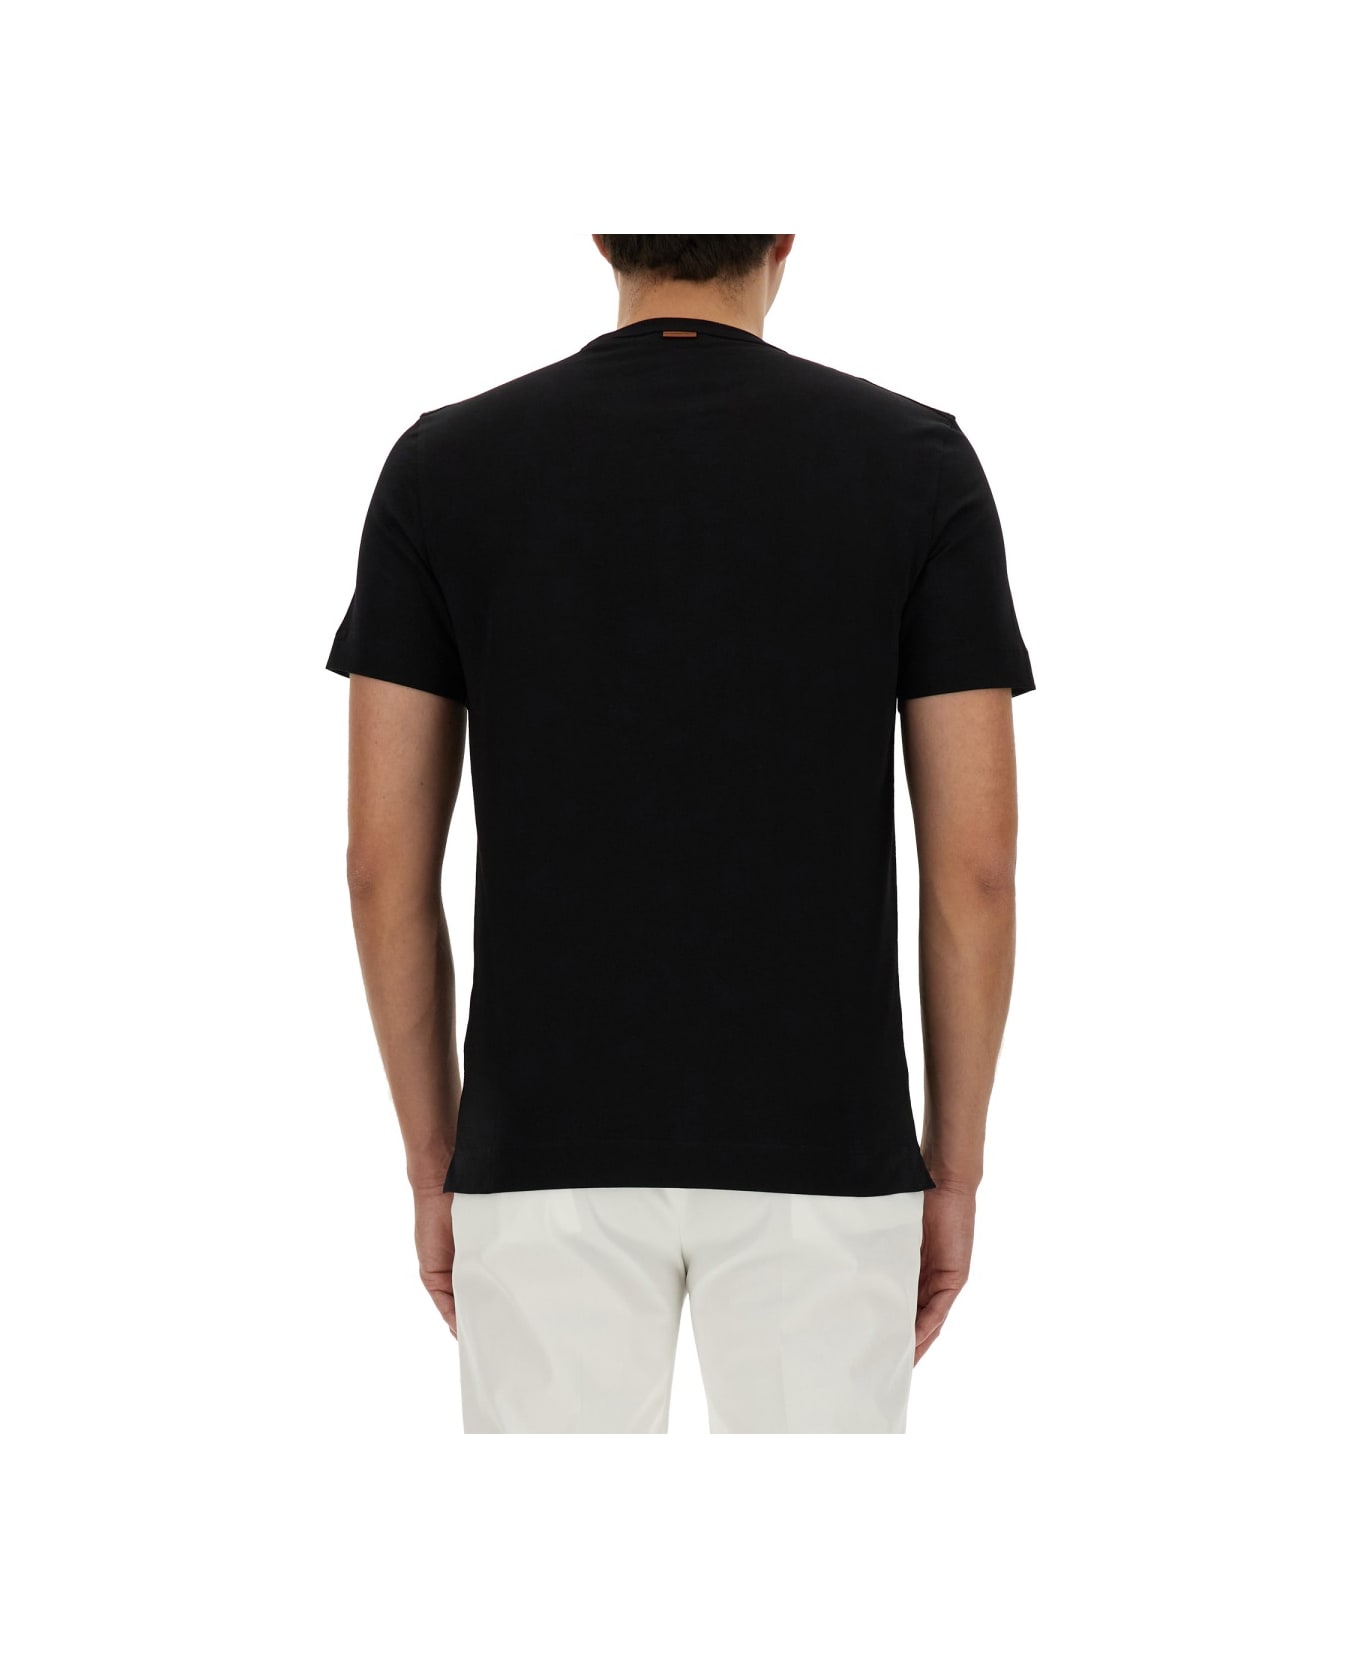 Zegna T-shirt With Logo - BLACK